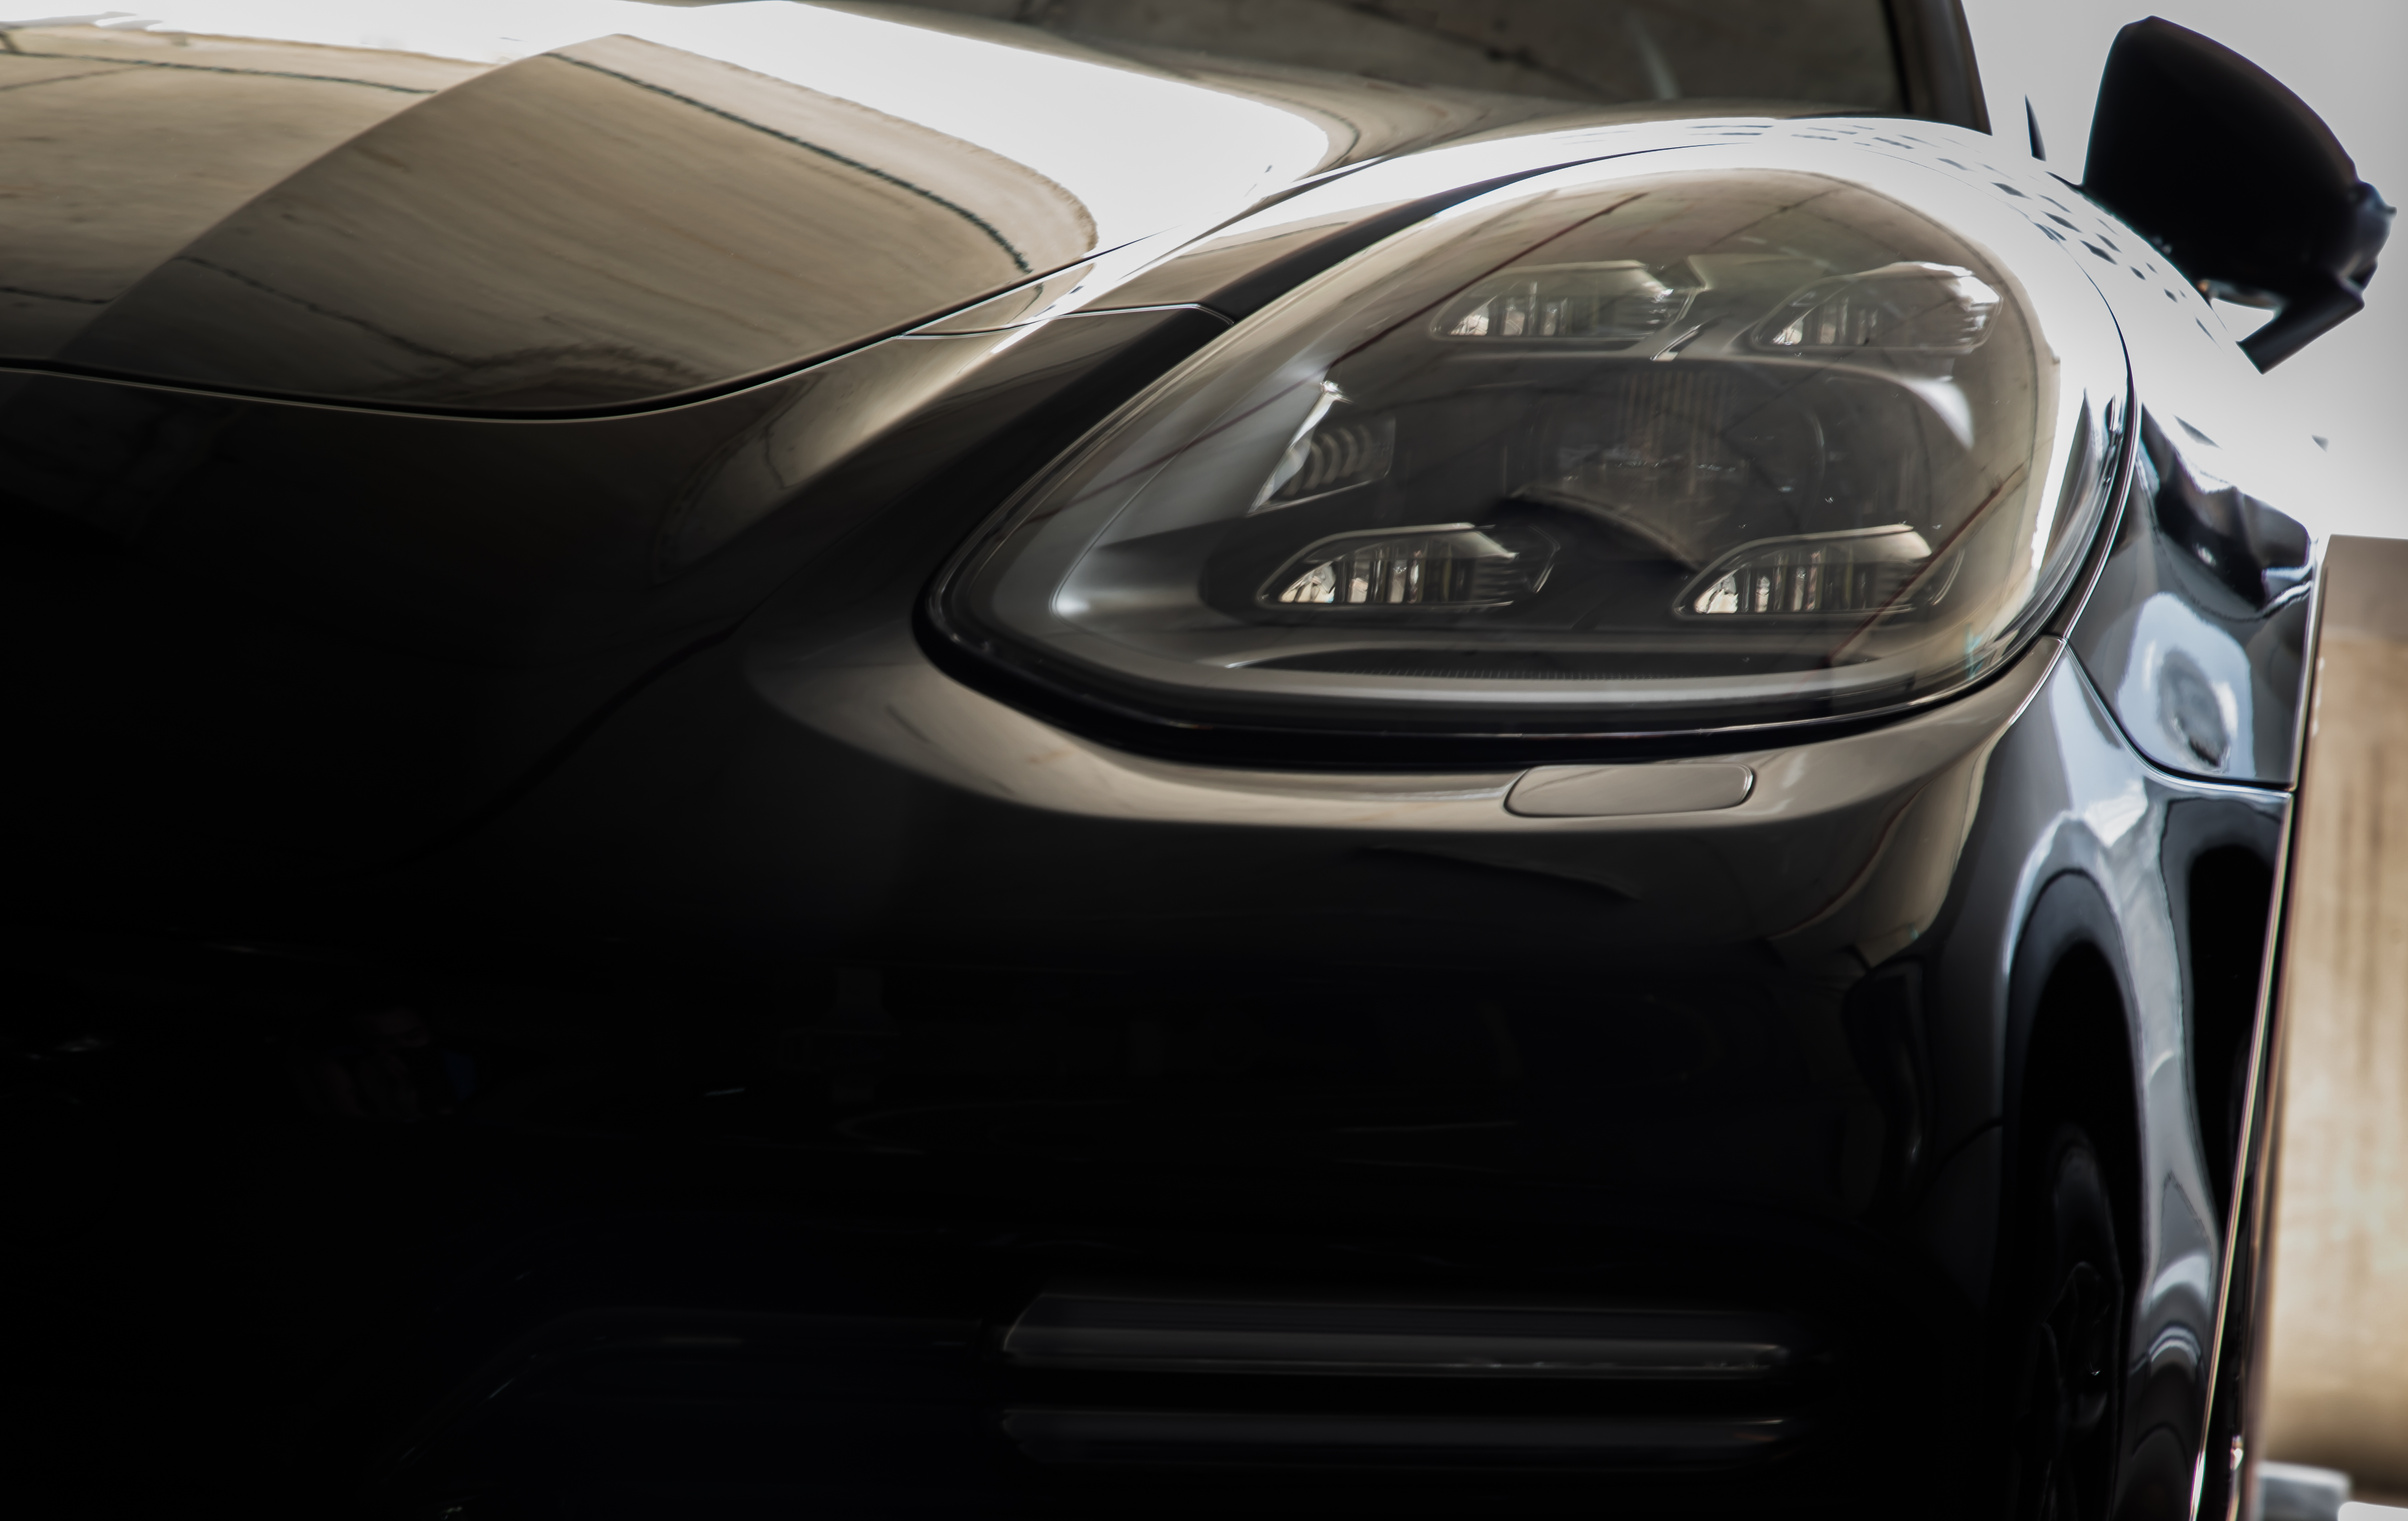 Close-up of Headlights of Black Porsche Car.